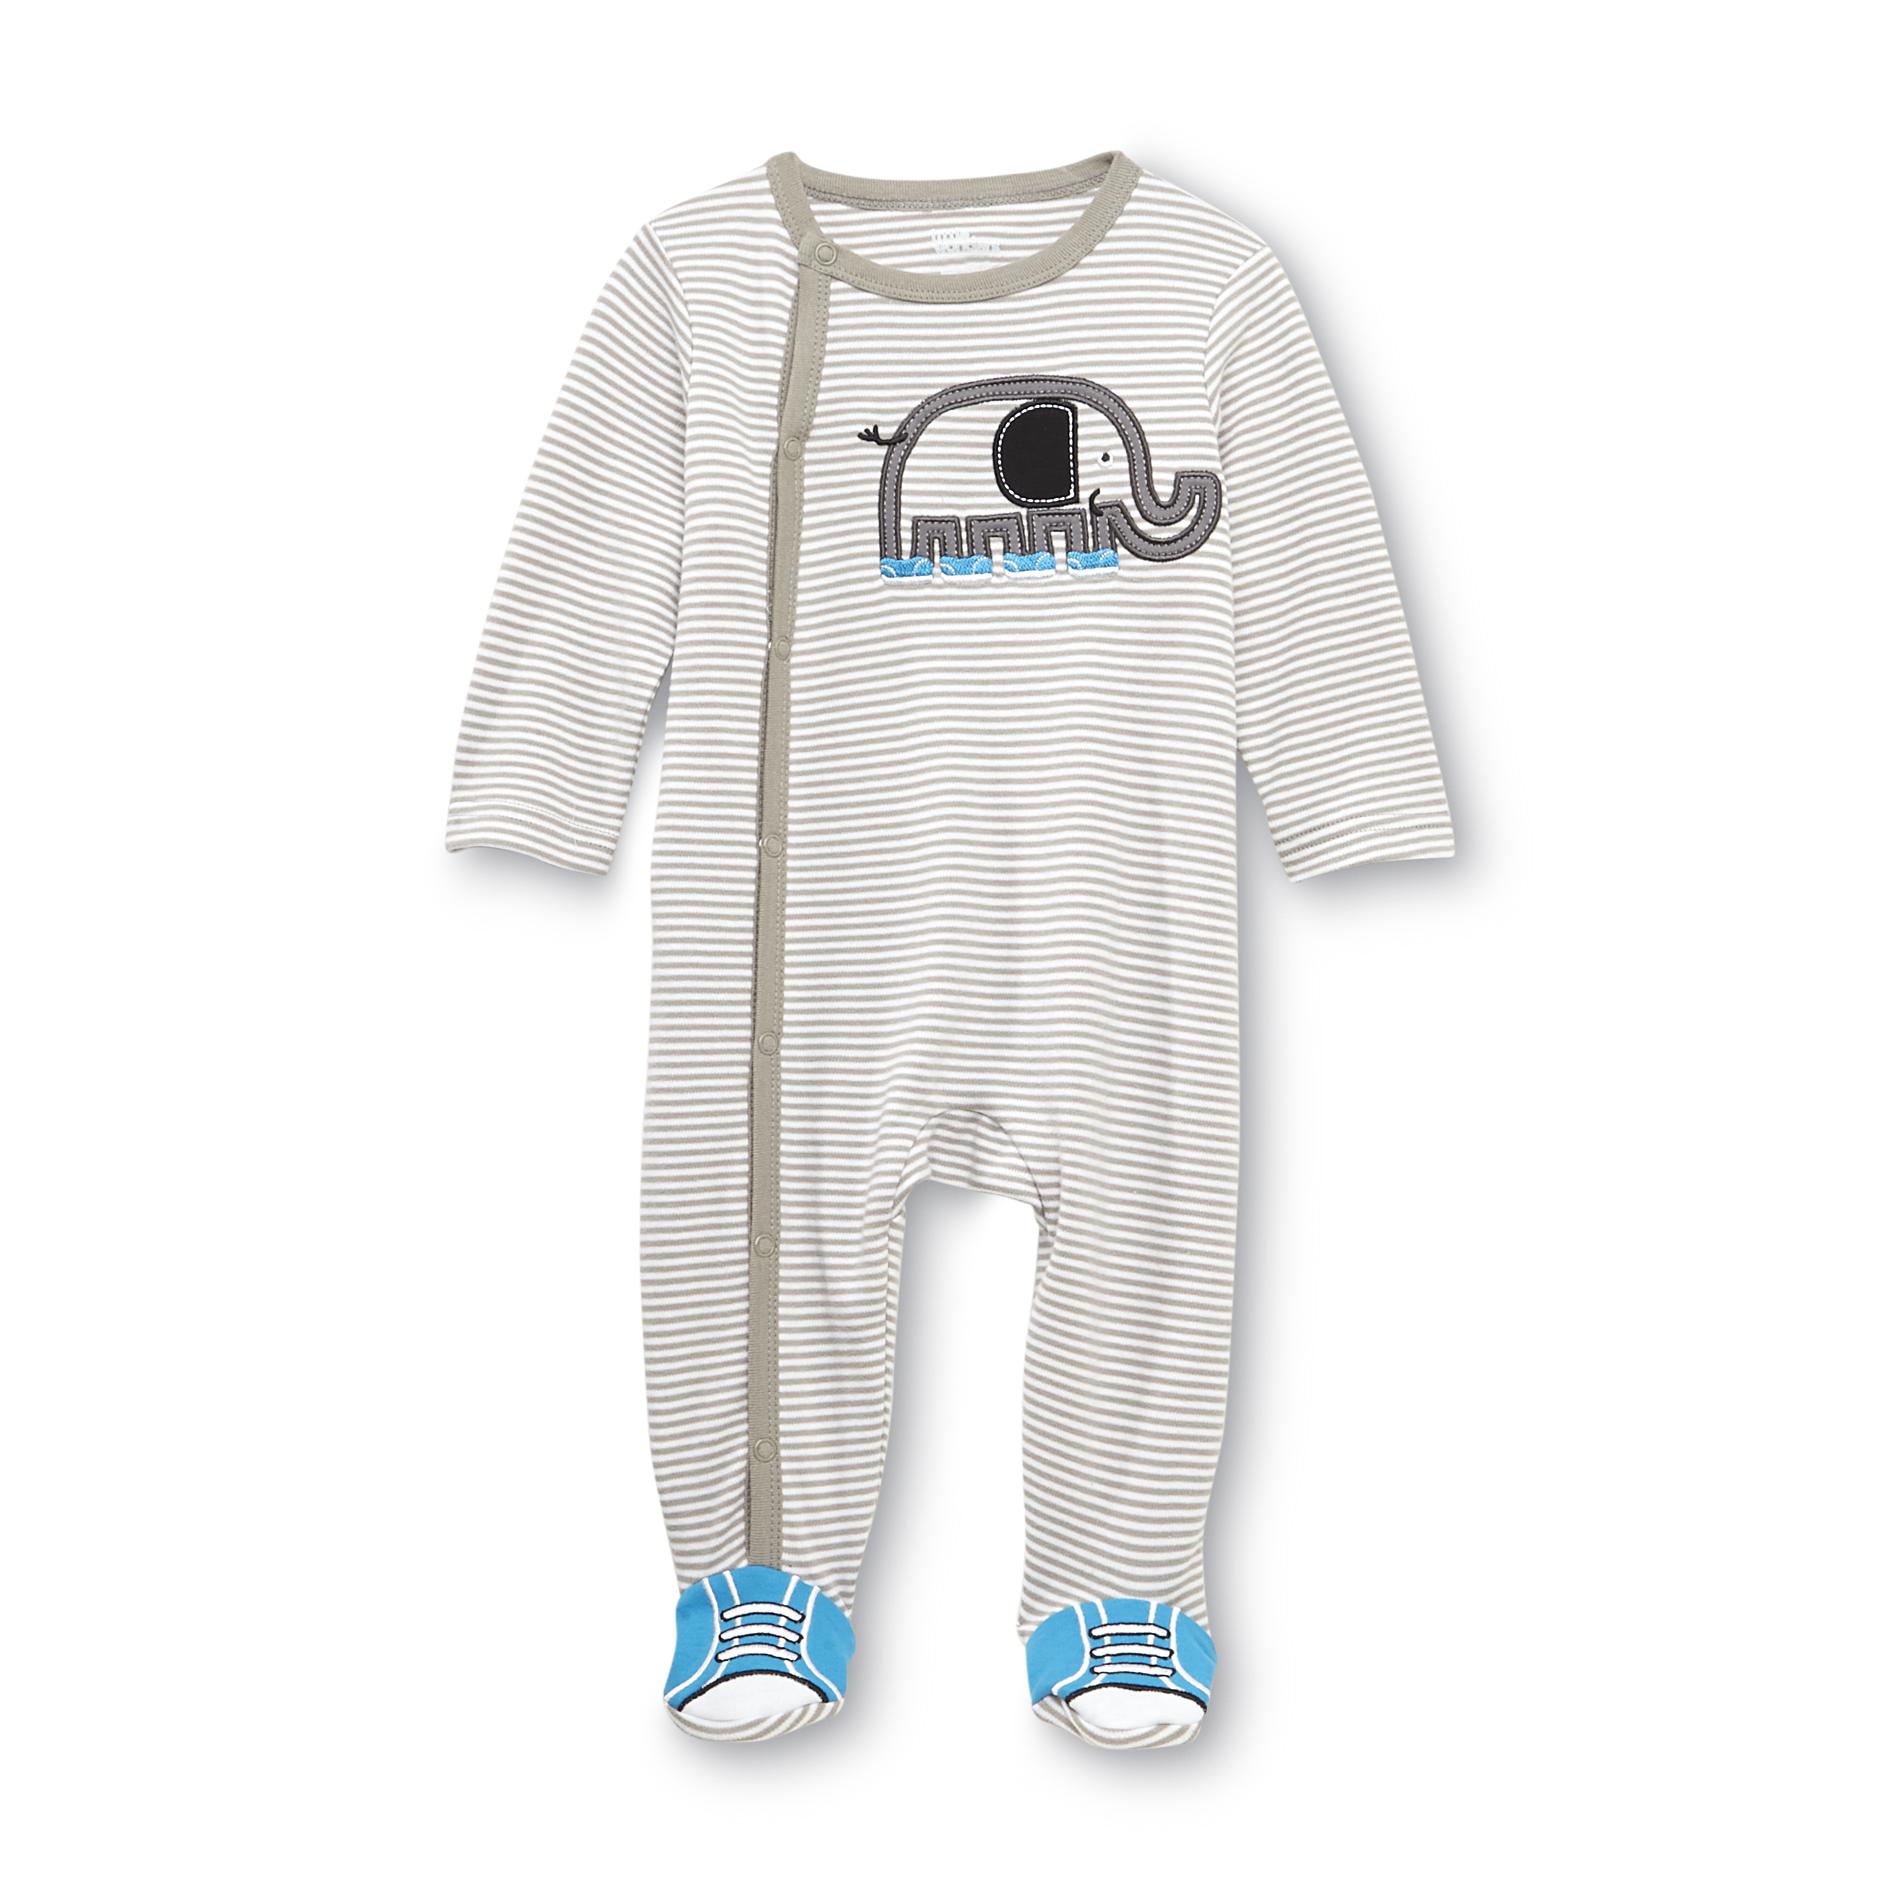 Little Wonders Newborn Boy's Sleeper Pajamas - Elephant